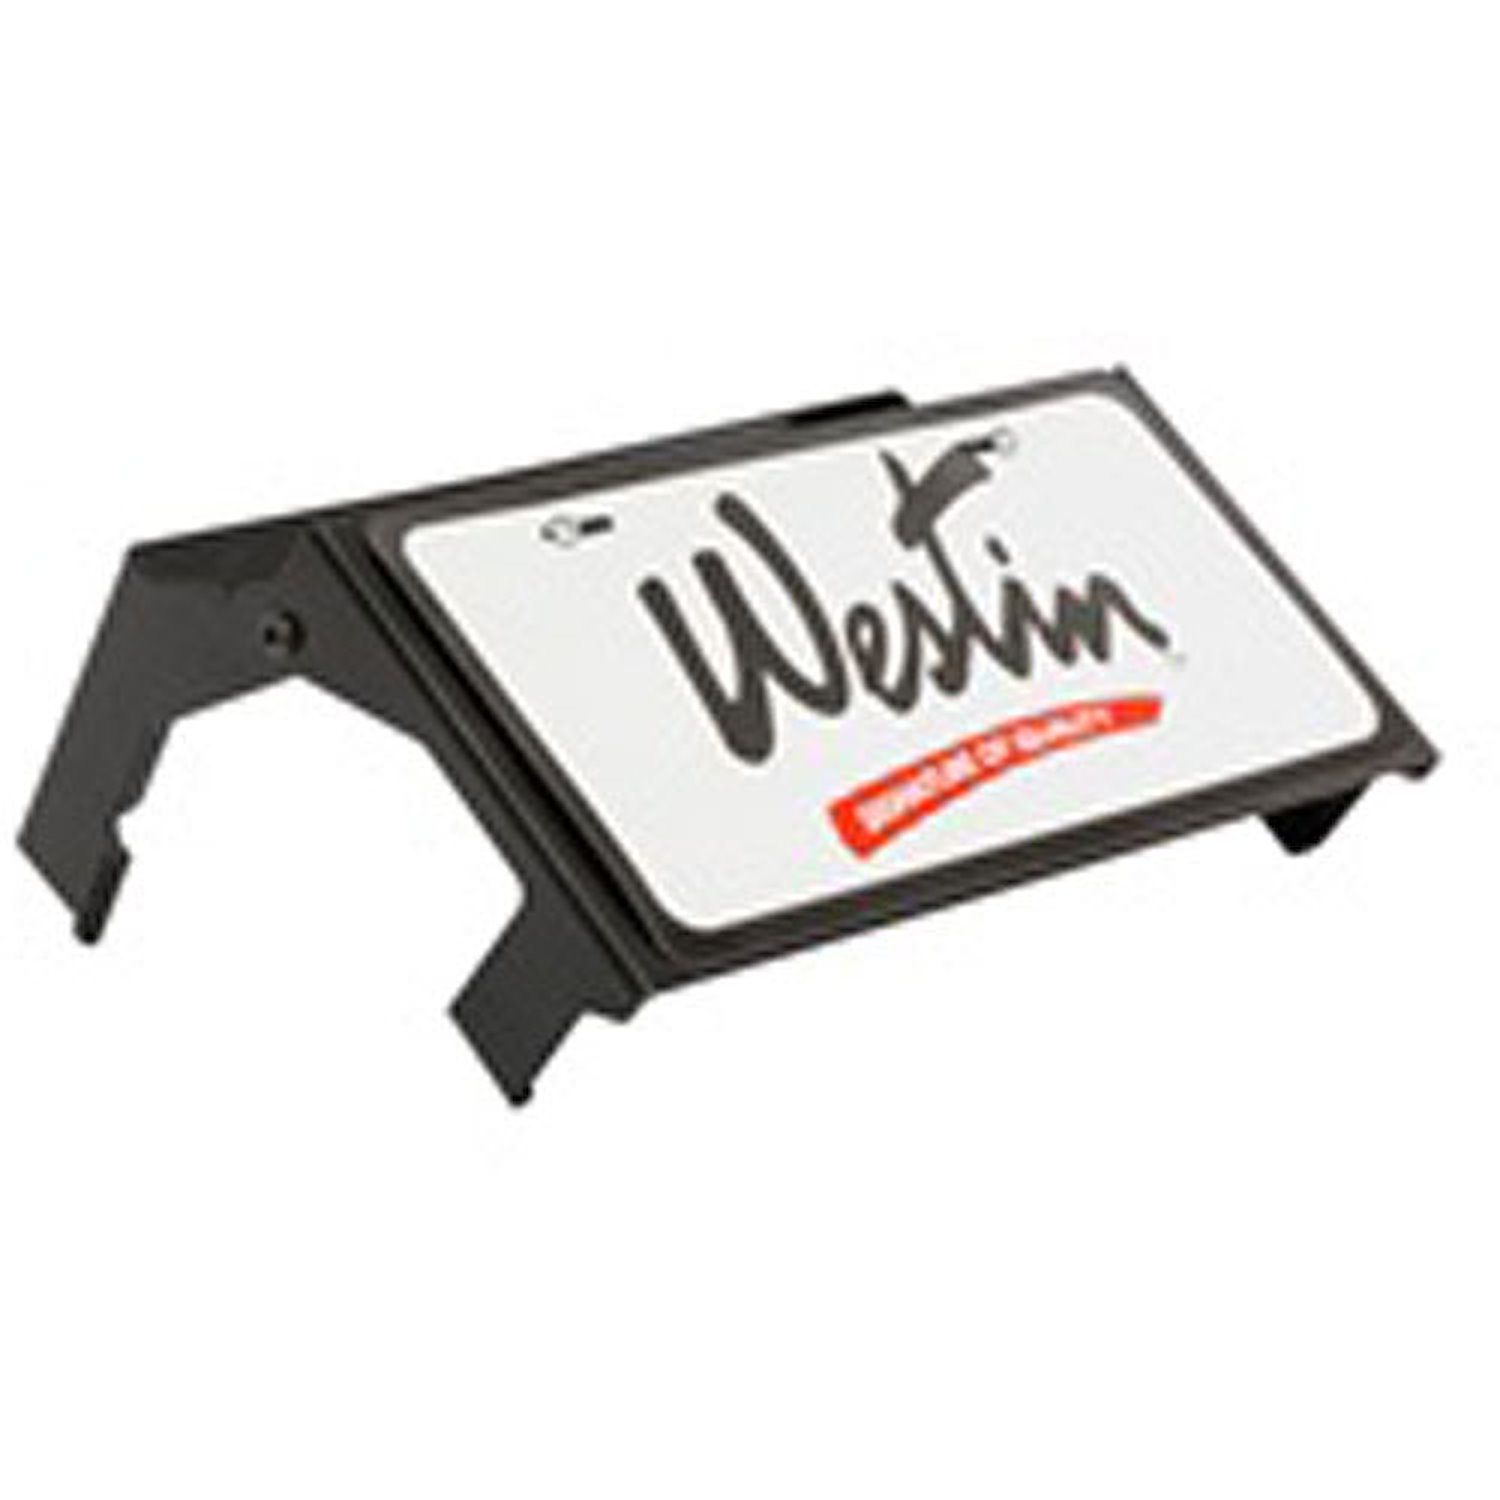 MAX Winch Tray License Plate Bracket Mounts to Winch Fairlead